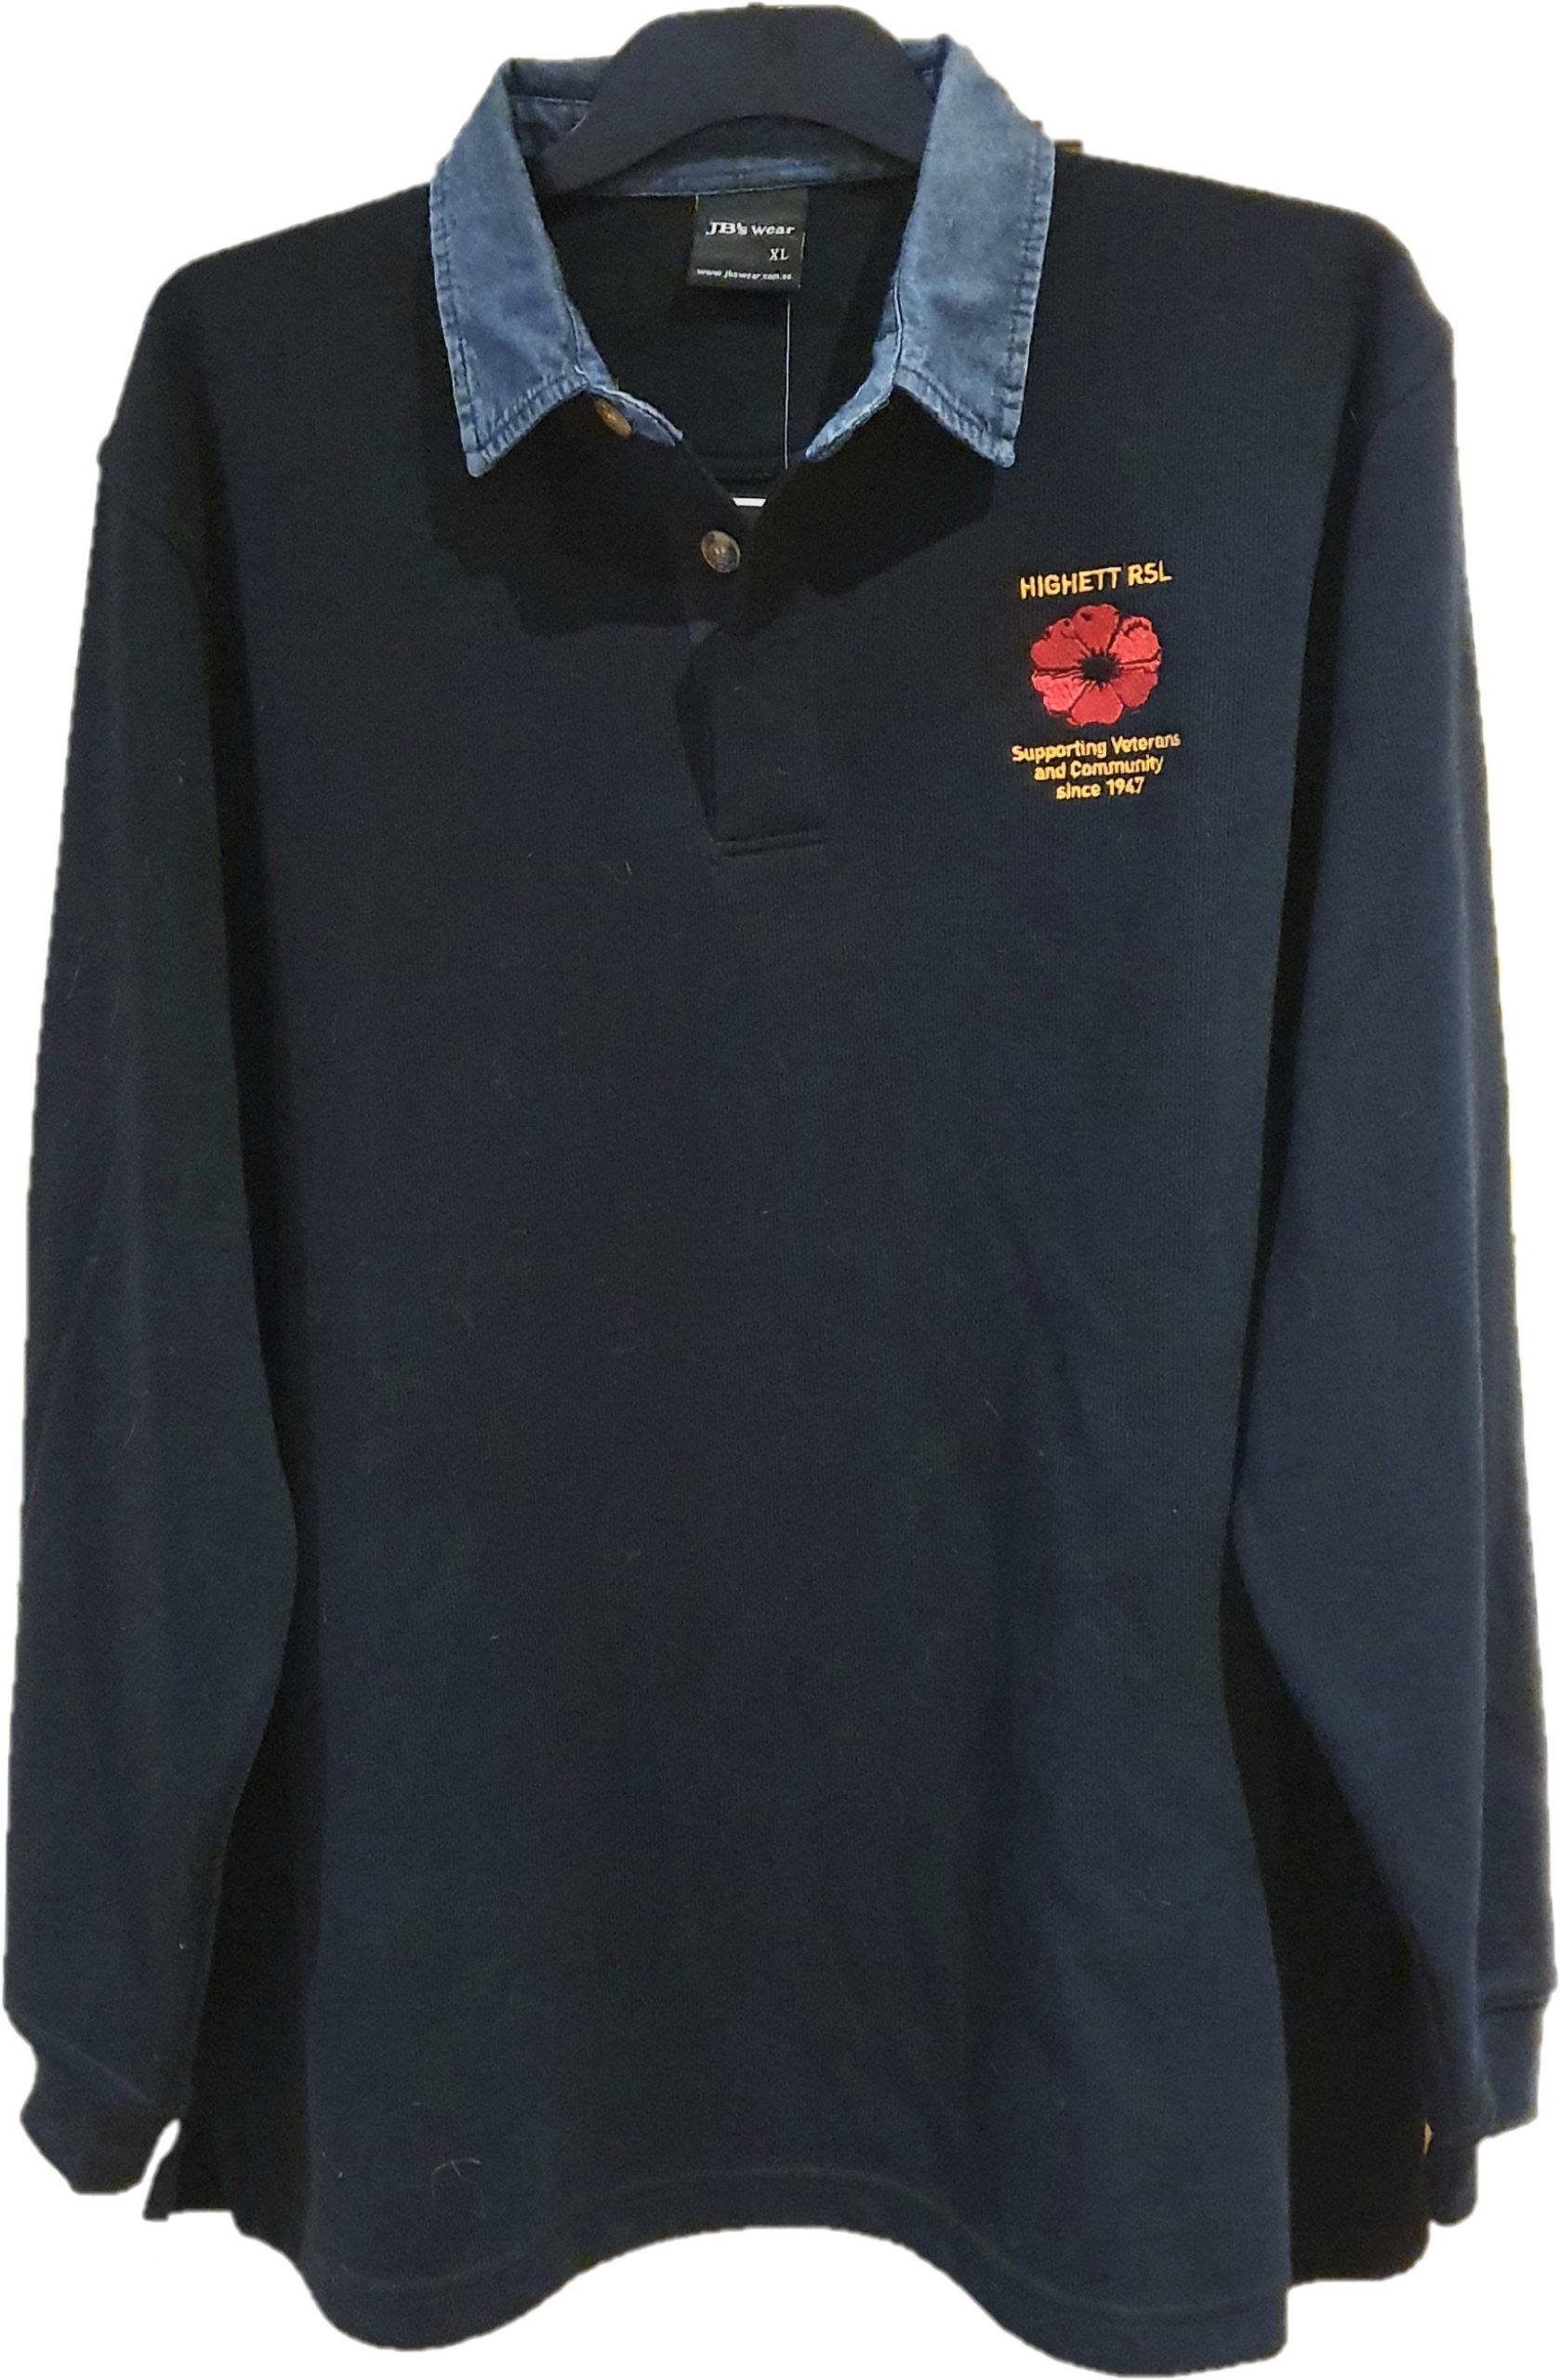 Rugby Top (Navy) with Denim Collar and Club Logo | Highett RSL Club